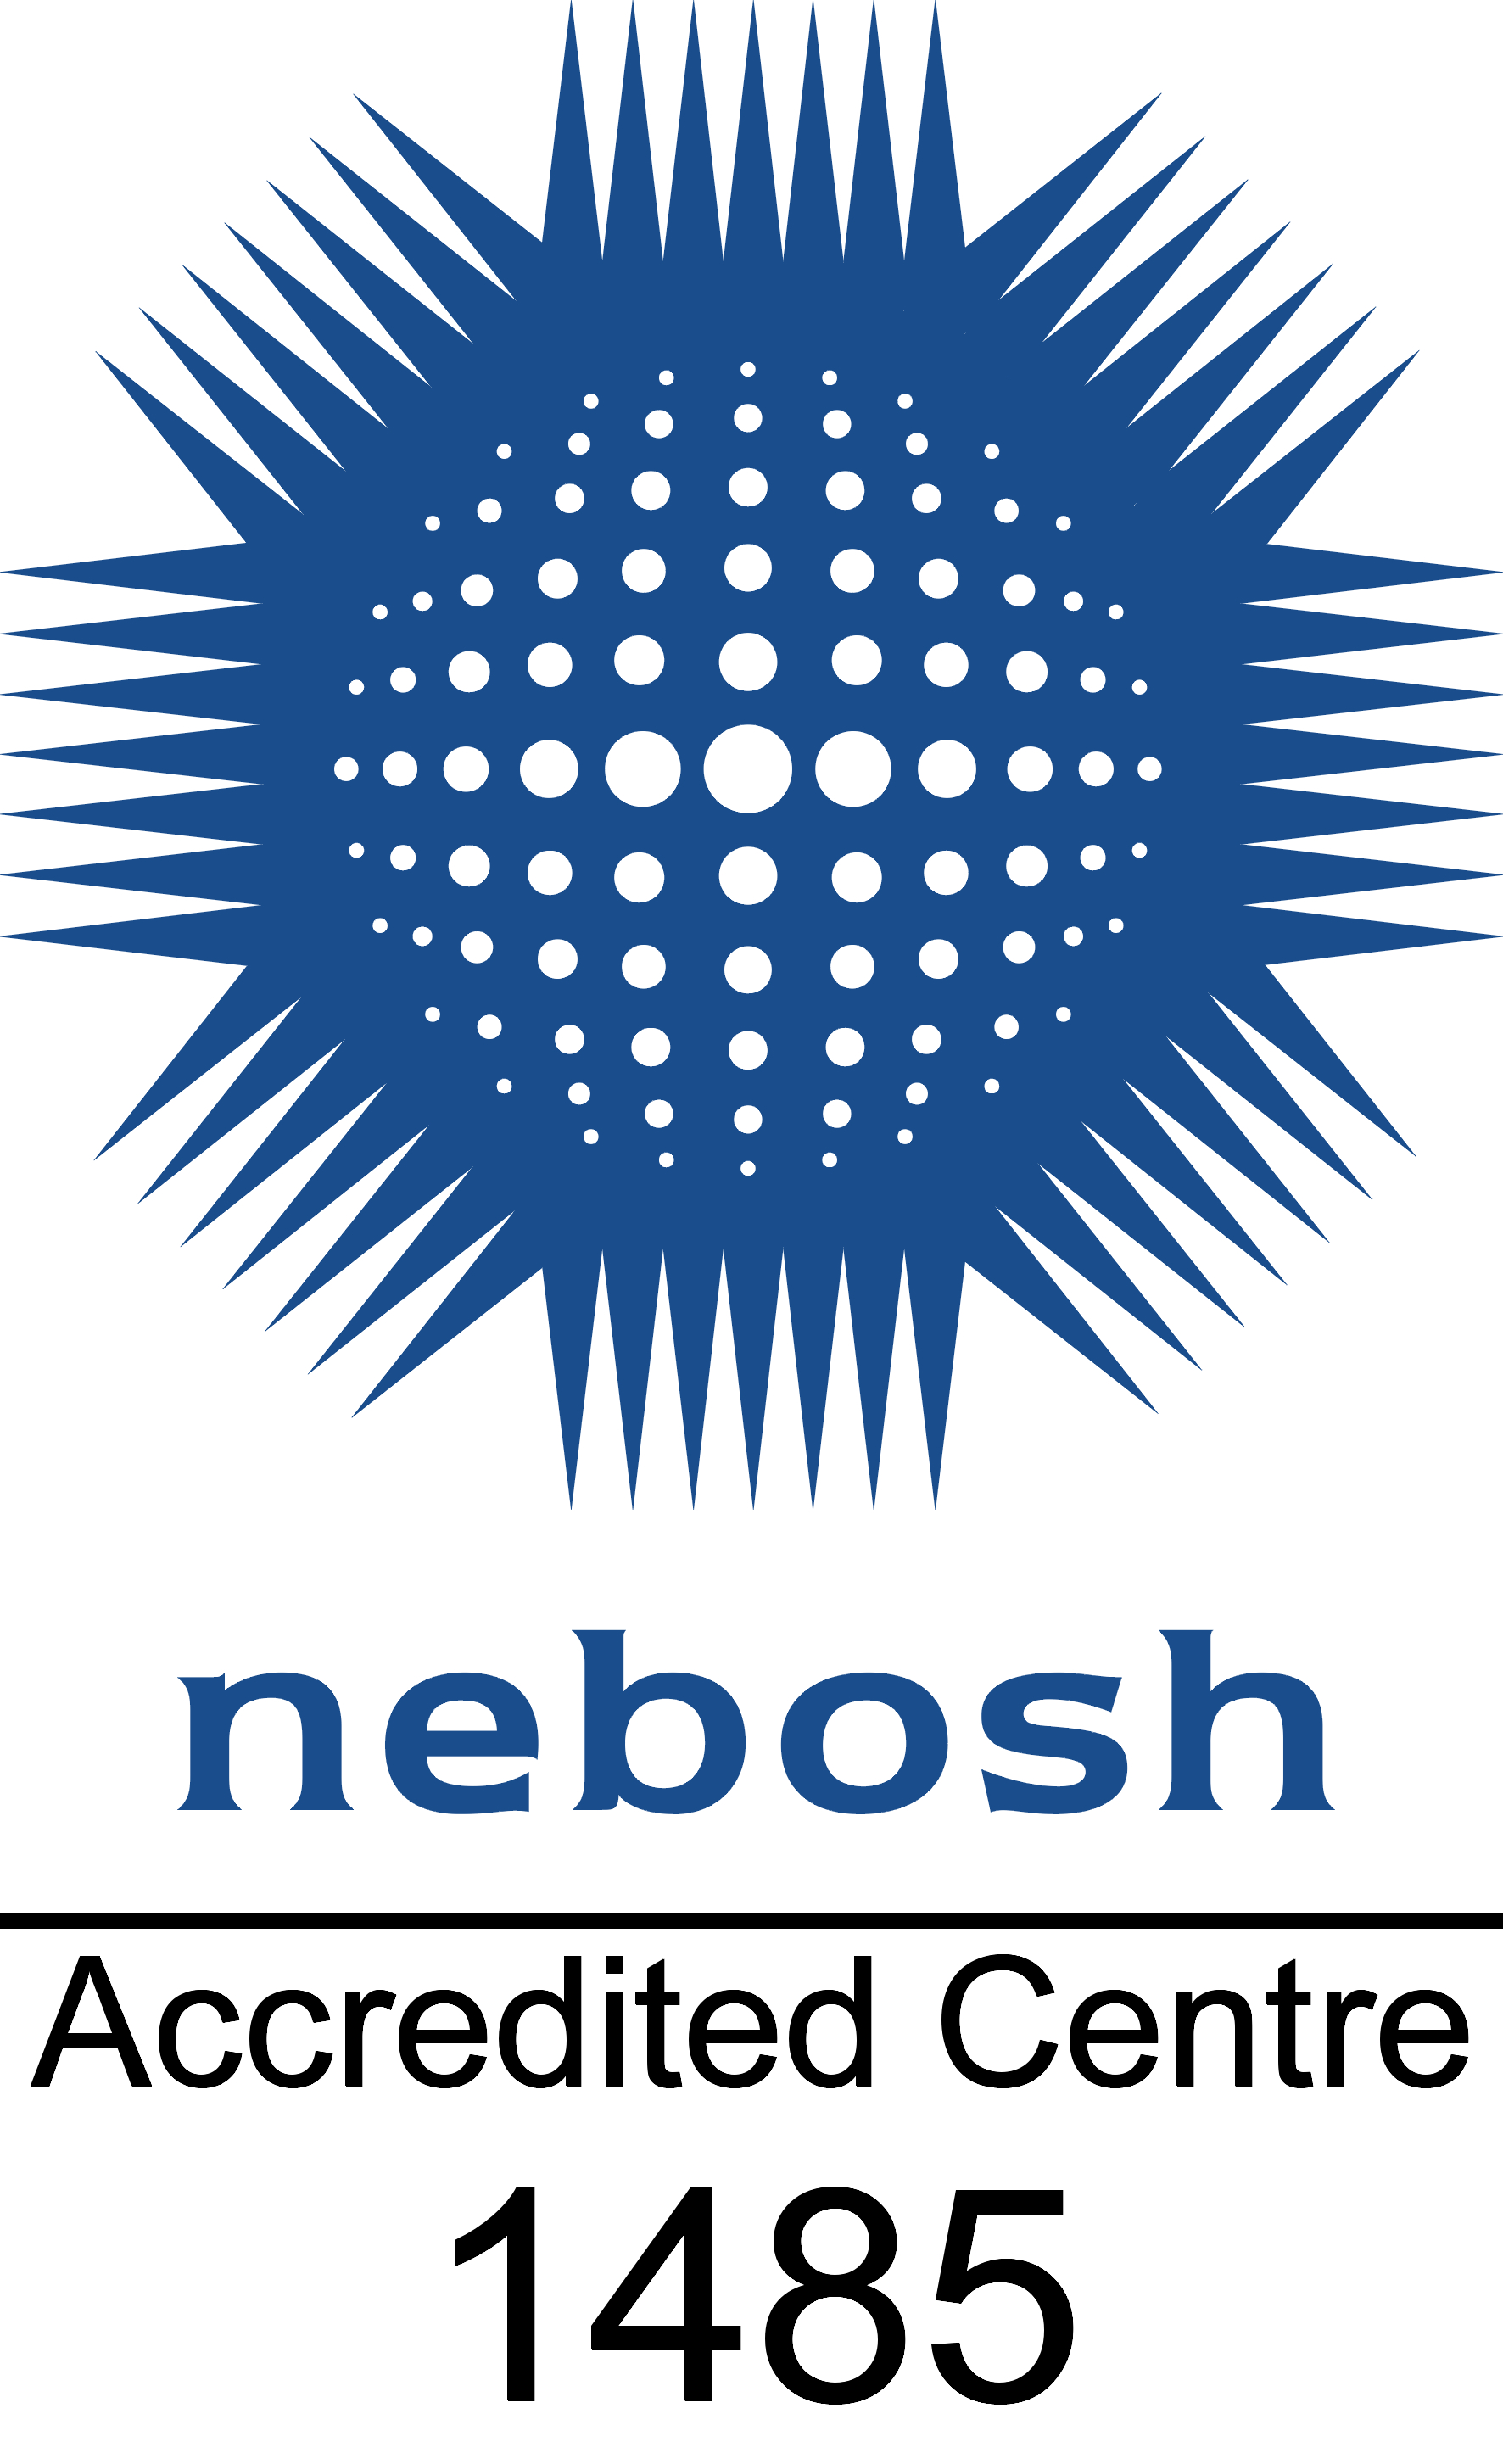 nebosh accredited centre logo